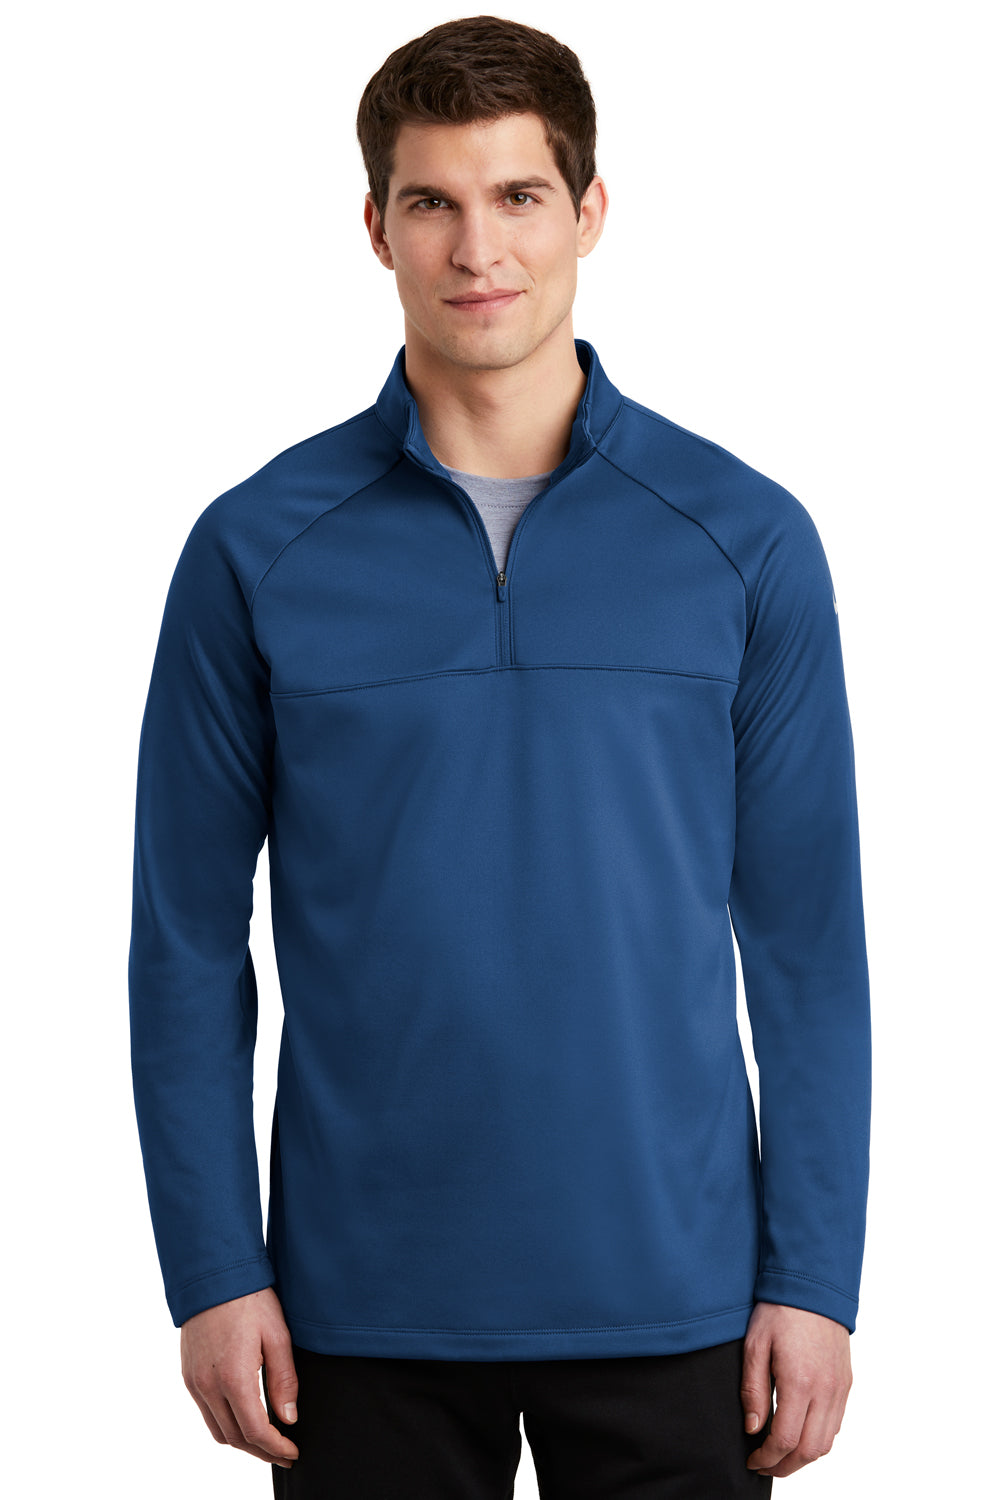 Nike NKAH6254 Mens Therma-Fit Moisture Wicking Fleece 1/4 Zip Sweatshirt Gym Blue Model Front